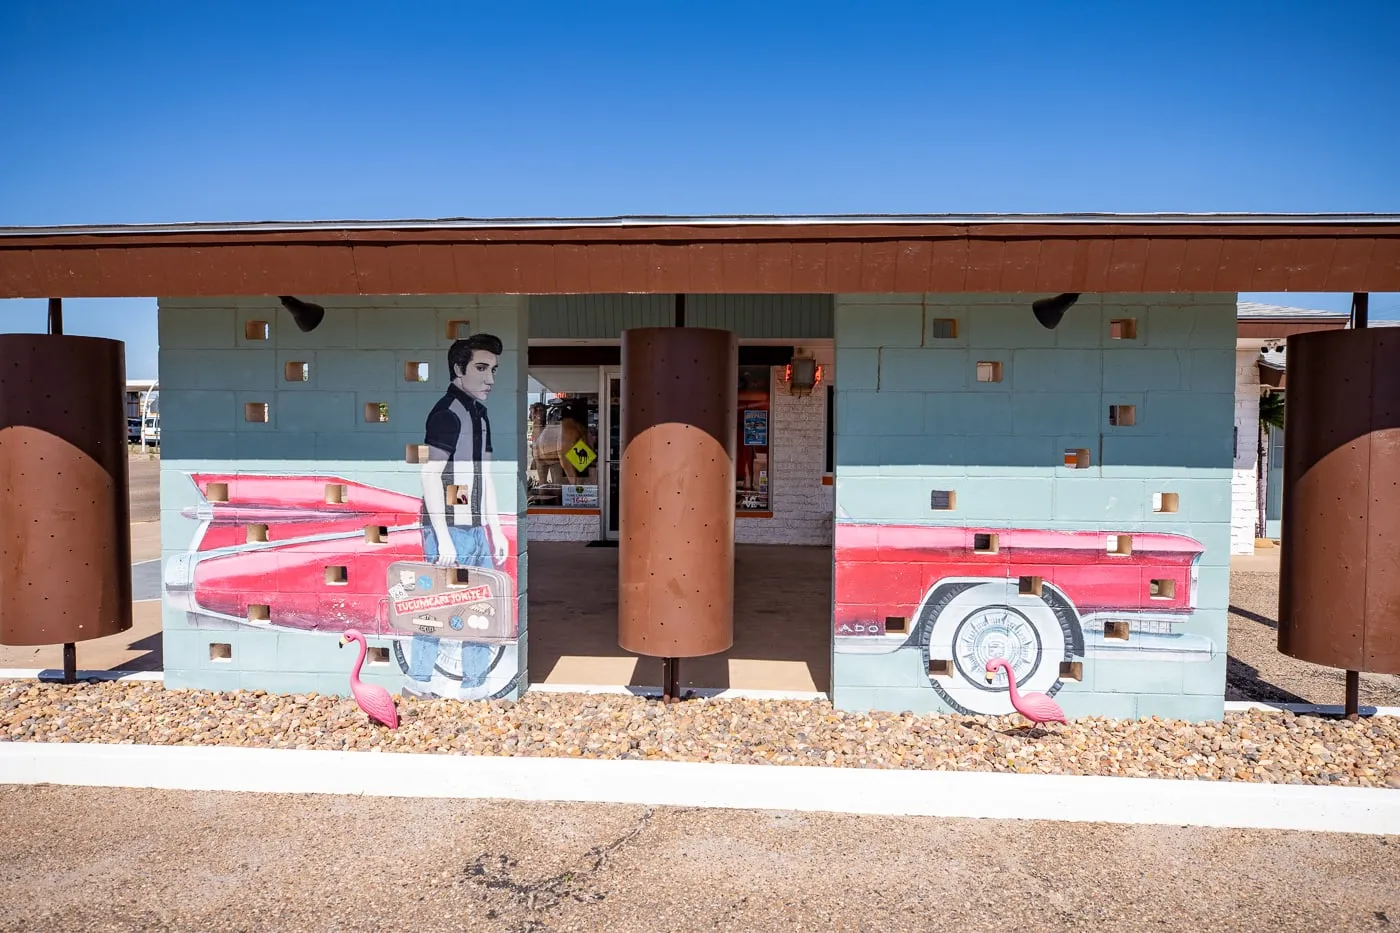 Elvis and Pink Cadillac Mural at Motel Safari in Tucumcari, New Mexico (Route 66 Motel)